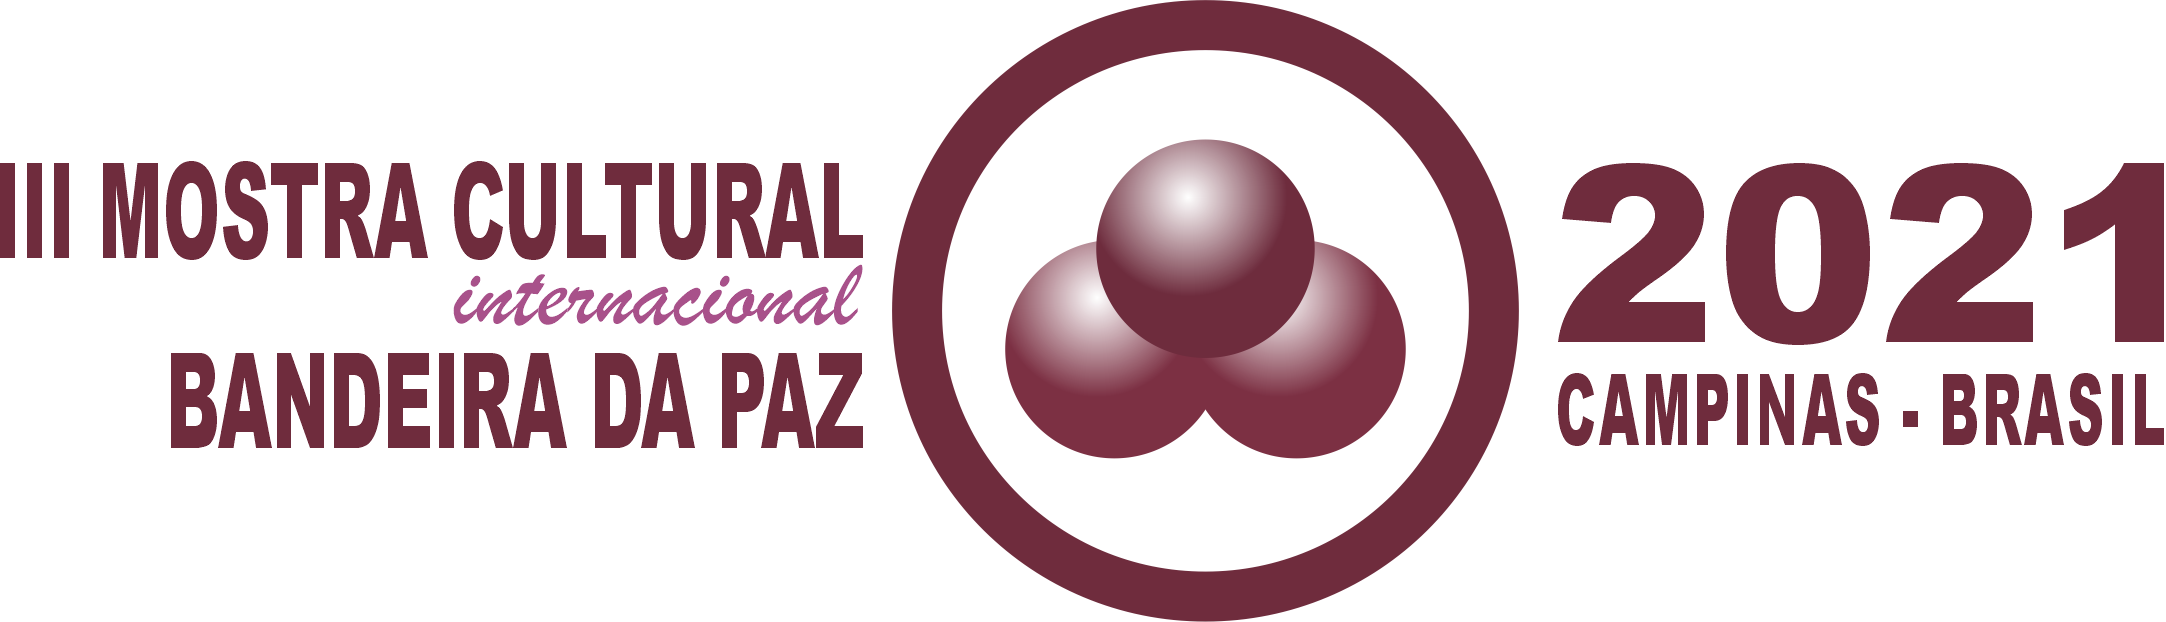 Logo MOSTRA CULTURAL 2021_CAMPINAS BRASIL